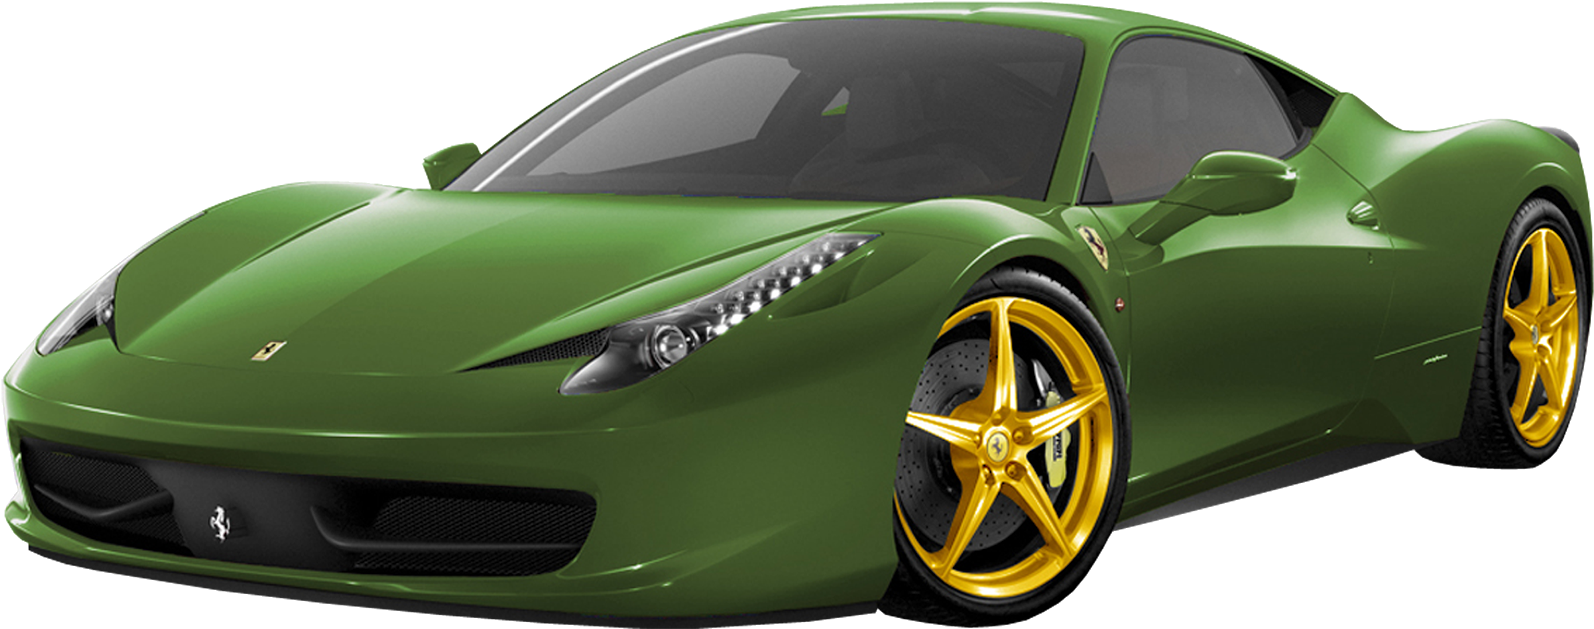 Green Ferrari Yellow Wheels PNG image